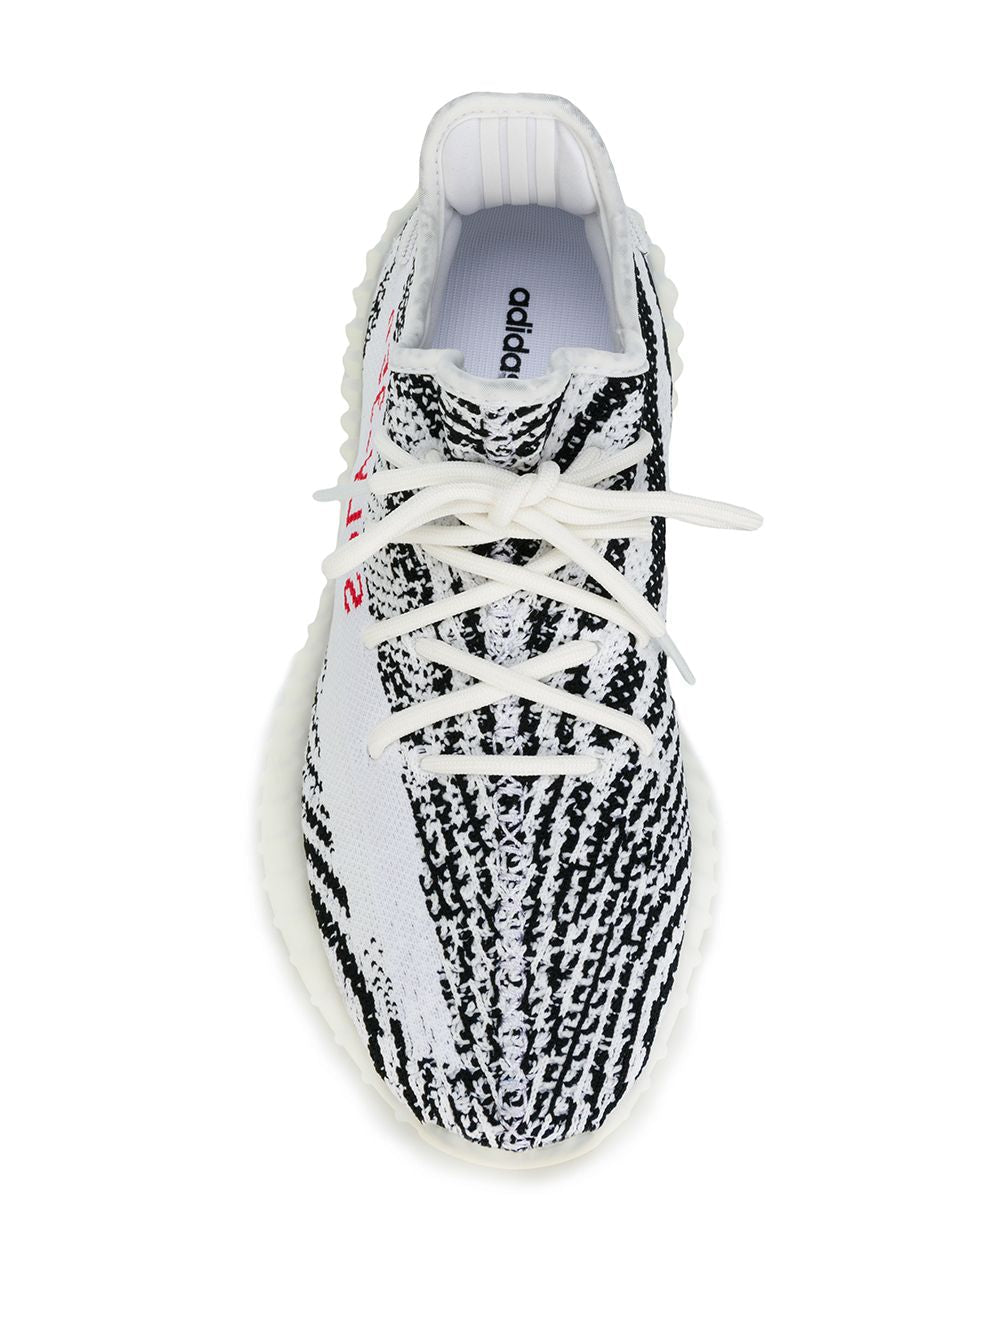 Adidas YEEZY Yeezy Boost 350 V2 "Zebra" sneaker